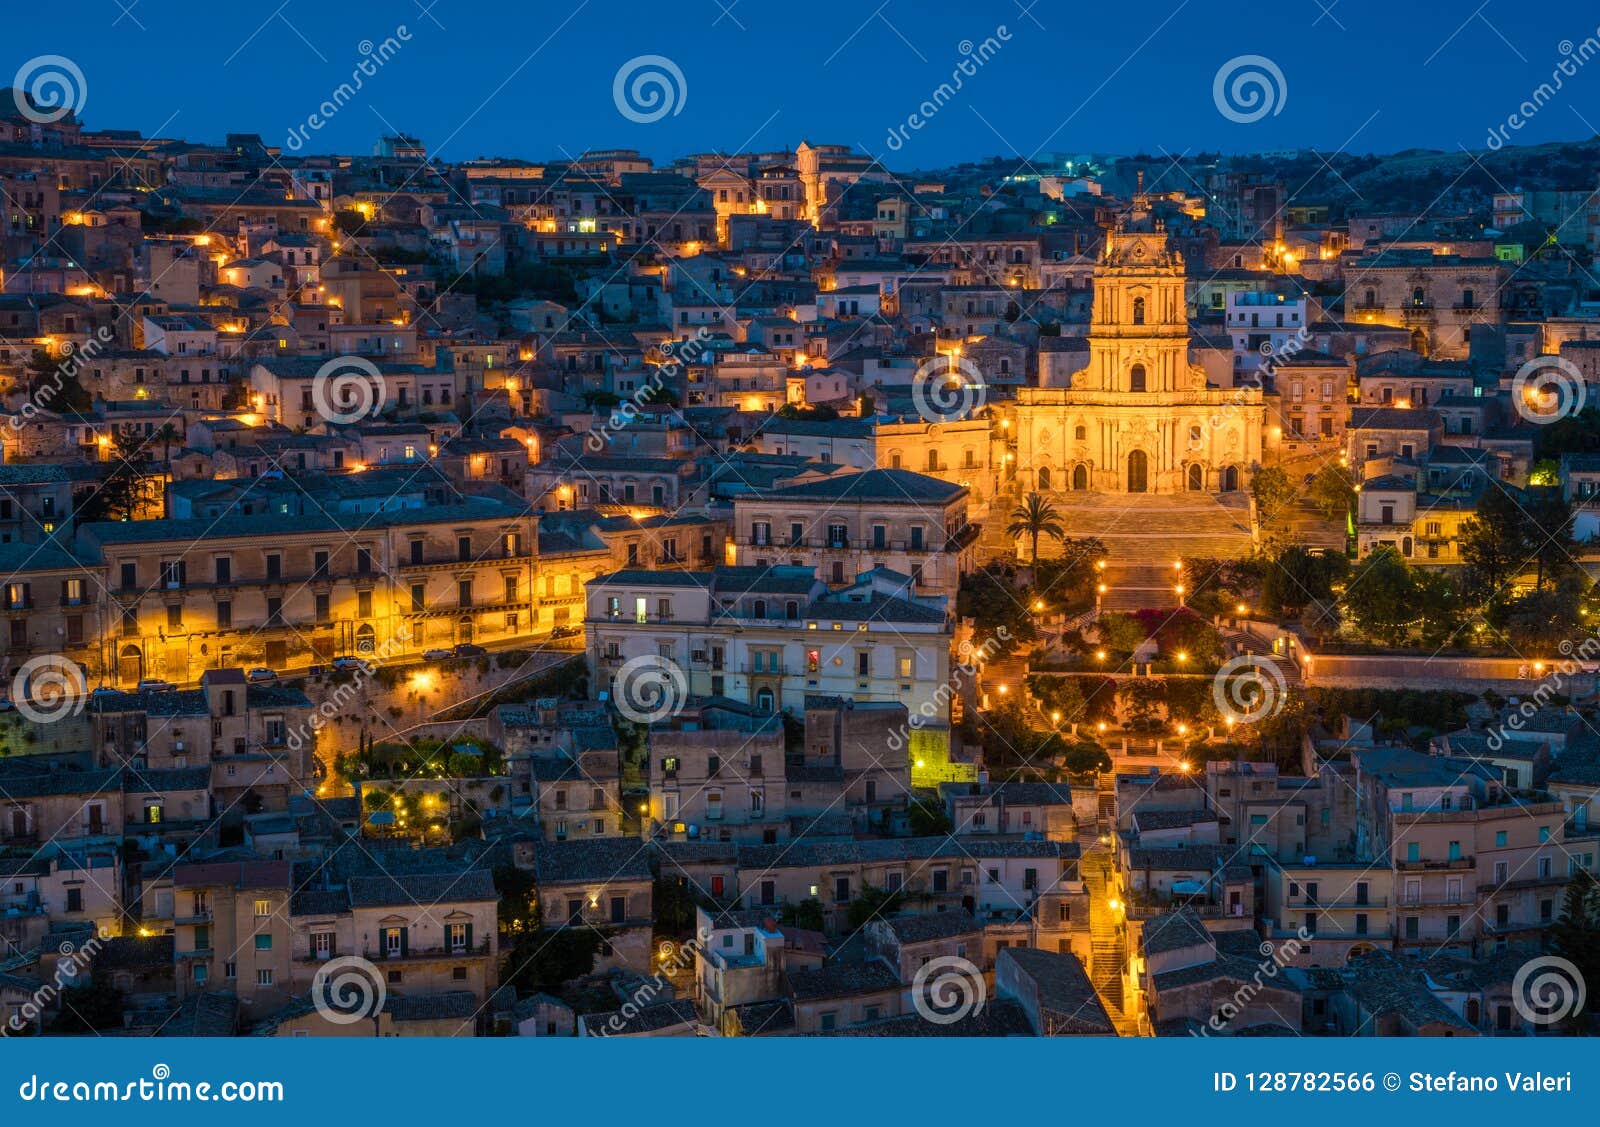 modica in the evening, amazing city in the province of ragusa, in the italian region of sicily sicilia.